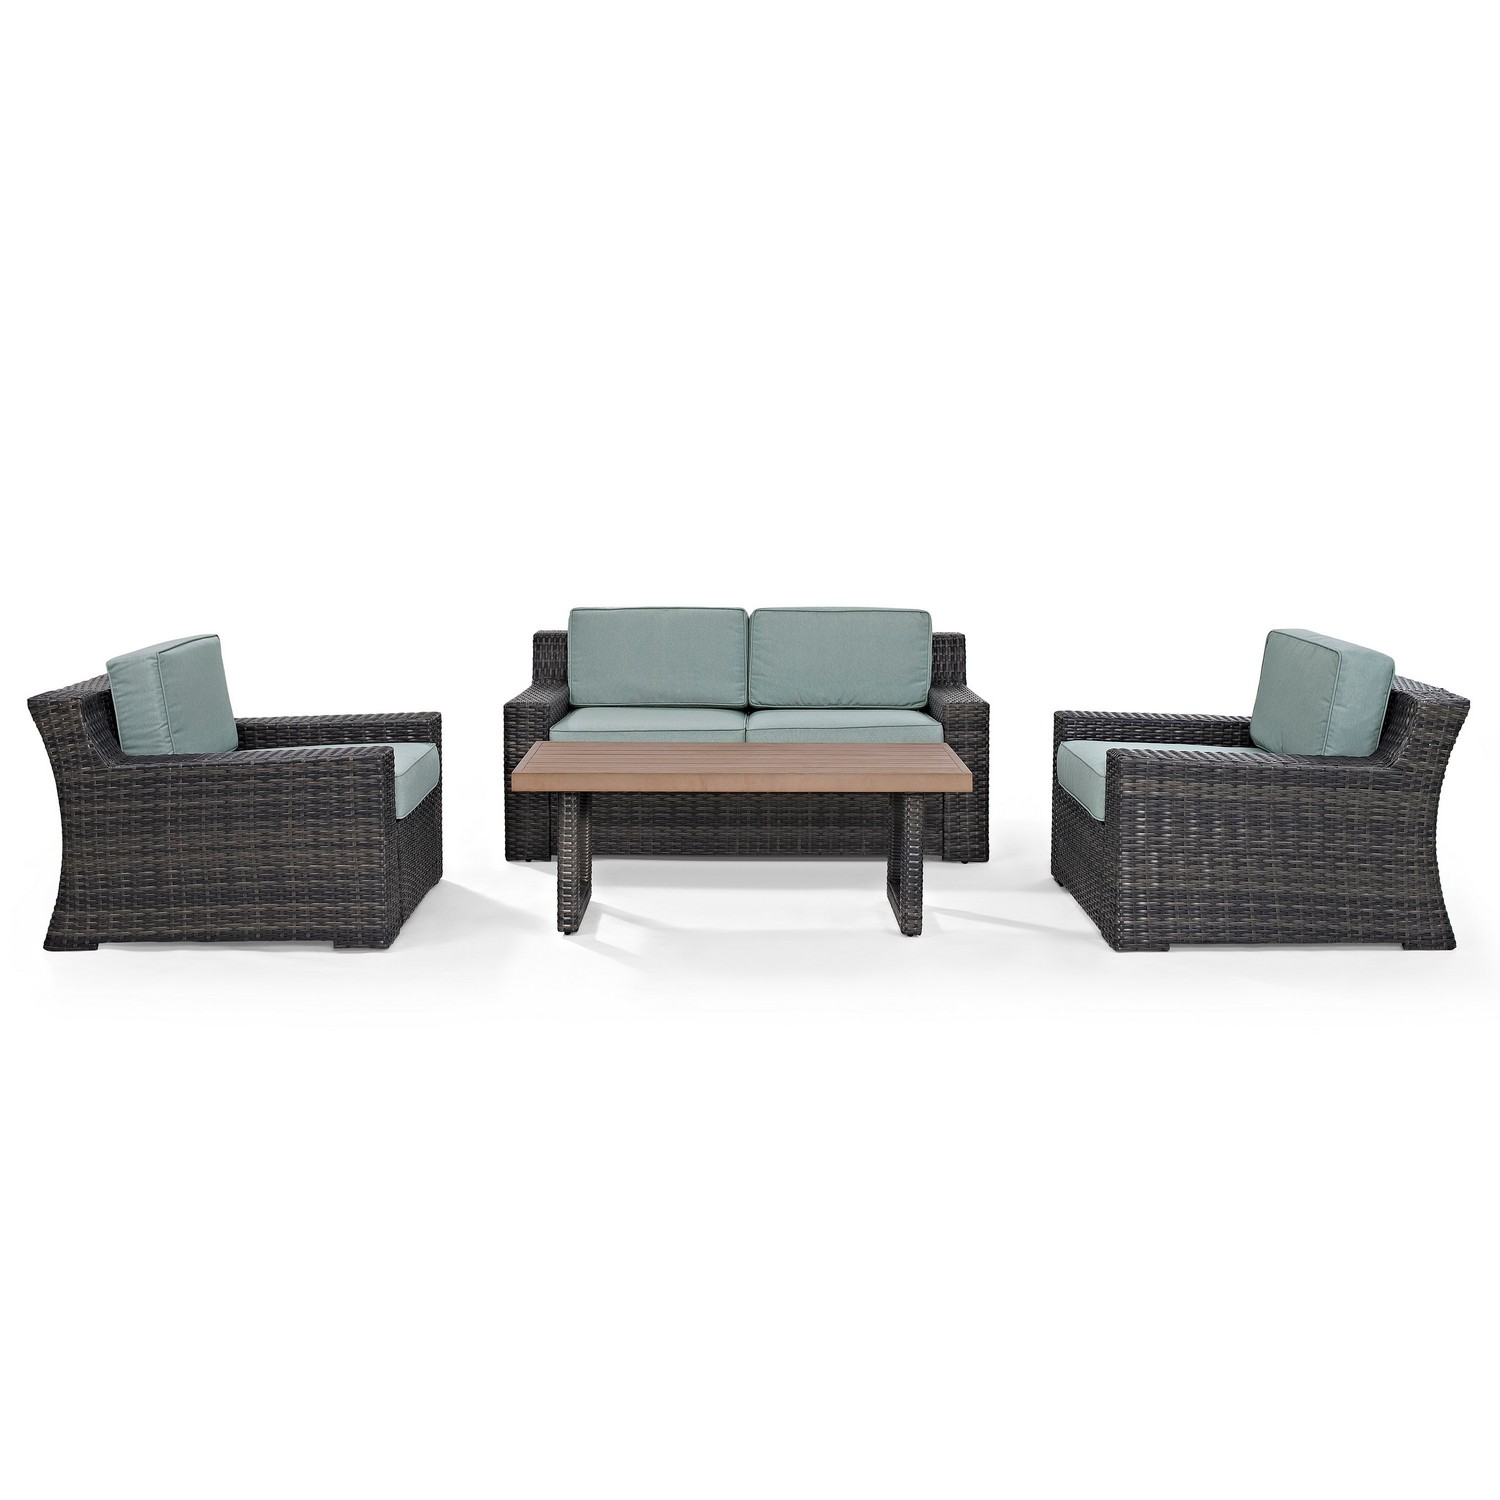 Crosley Beaufort 4-PC Outdoor Wicker Conversation Set - Loveseat, 2 Chairs, Coffee Table - Mist/Brown